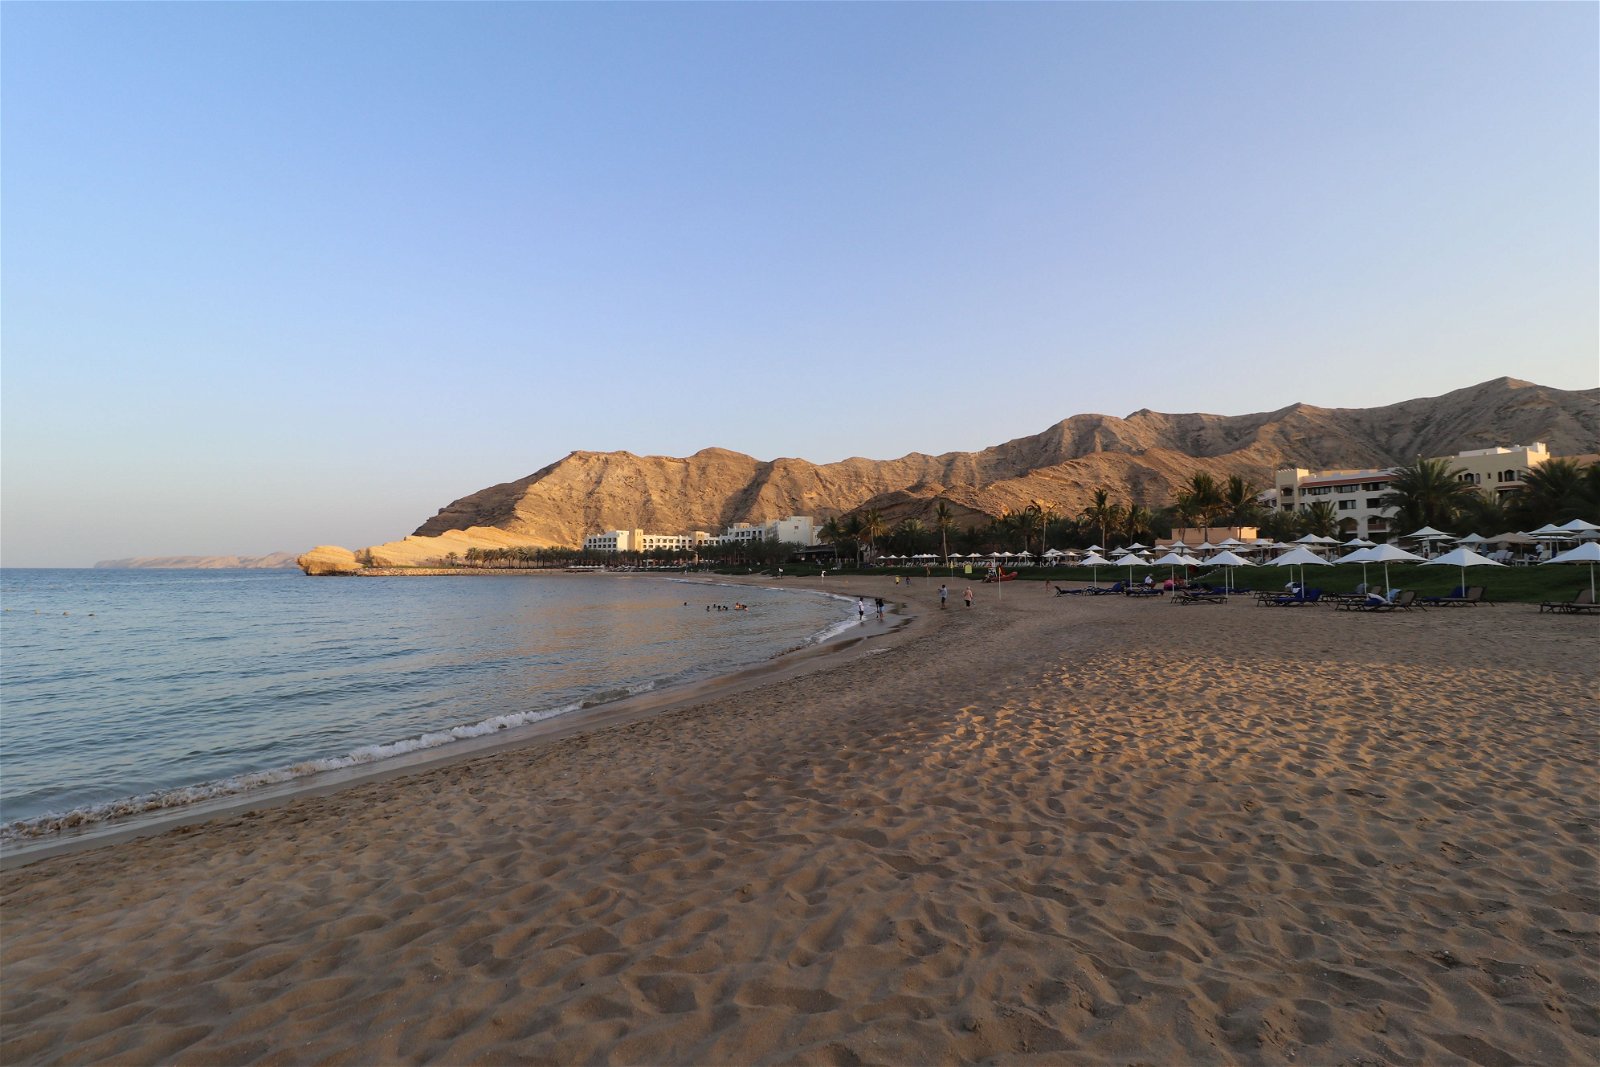 The general resort beach.